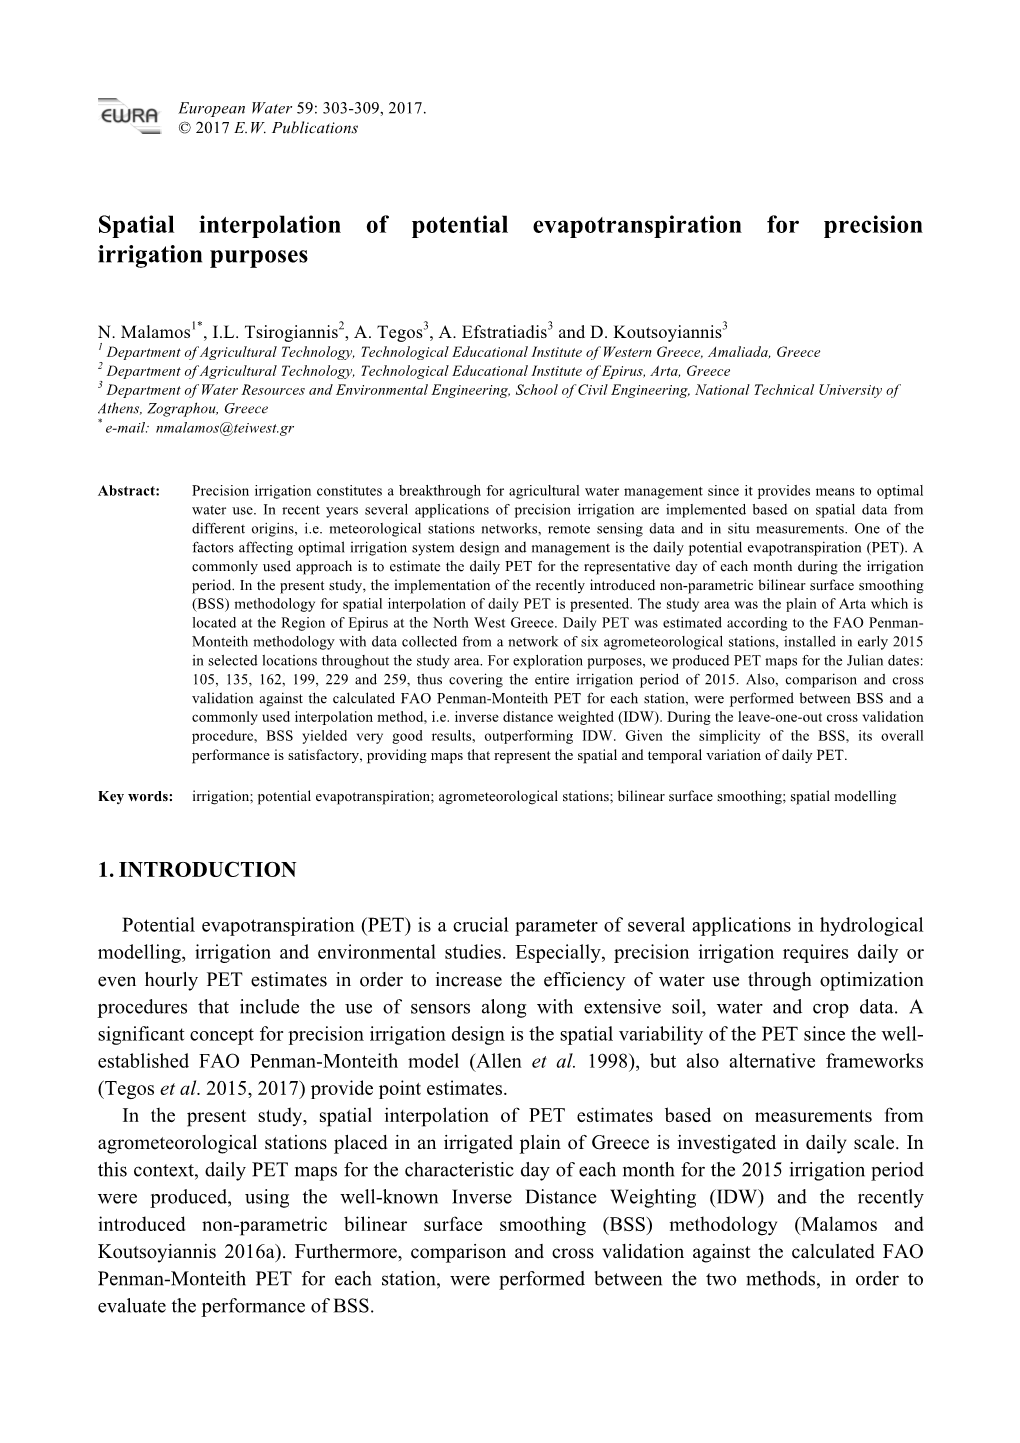 Spatial Interpolation of Potential Evapotranspiration for Precision Irrigation Purposes